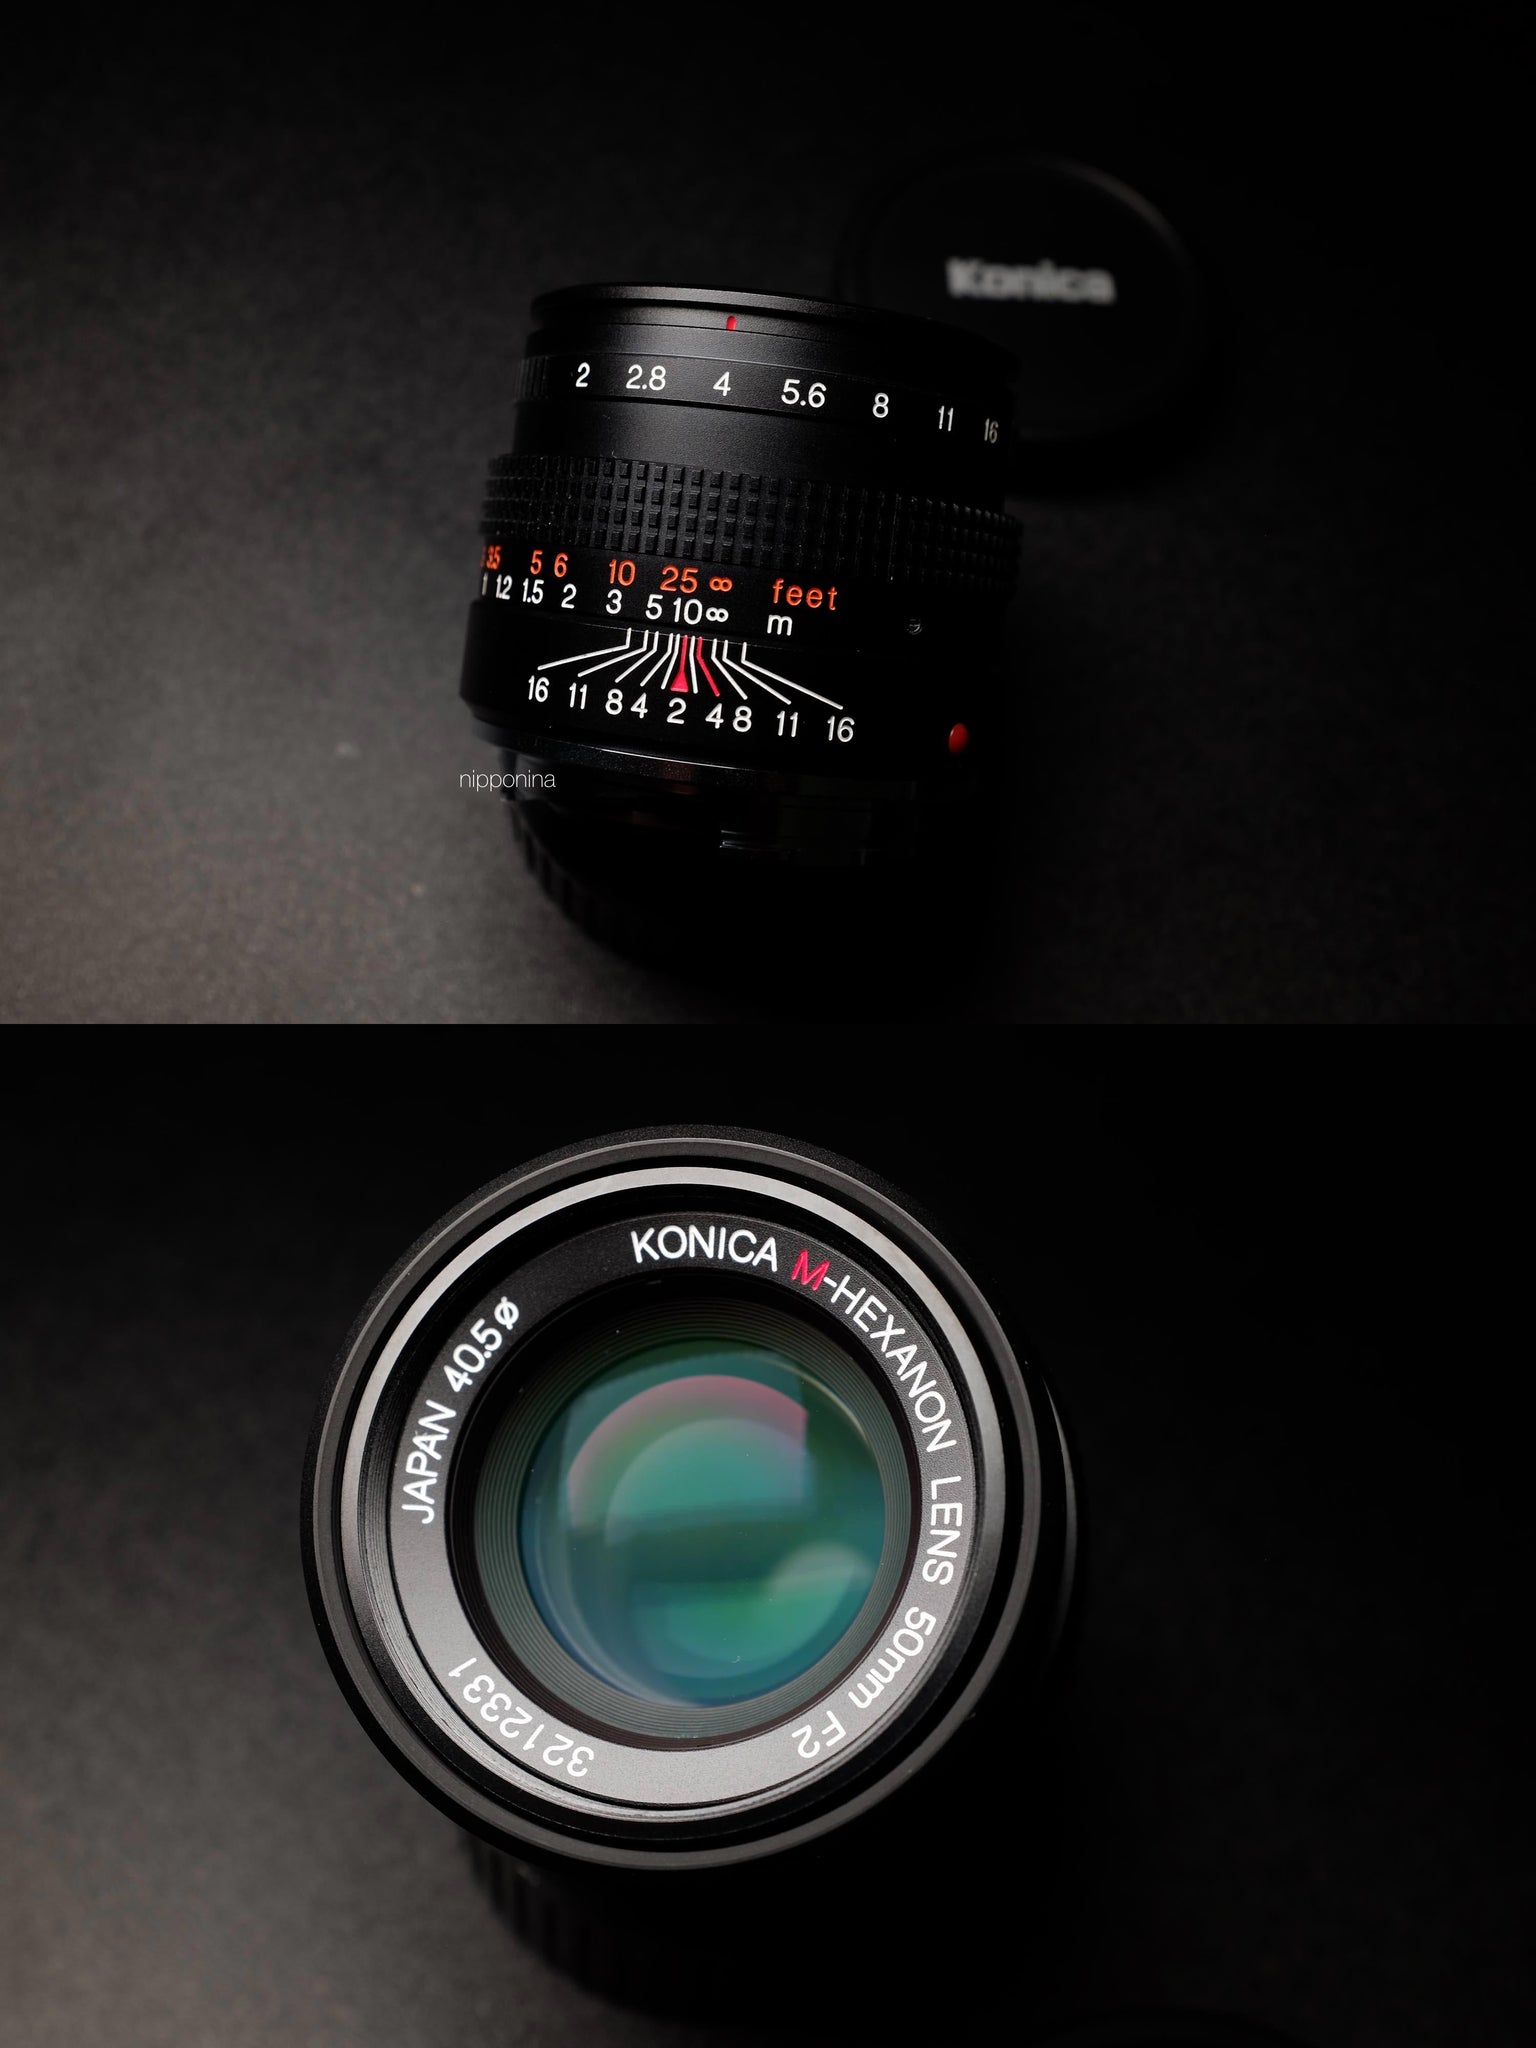 Konica M Hexanon 50mm F 2 – Nipponina Camera